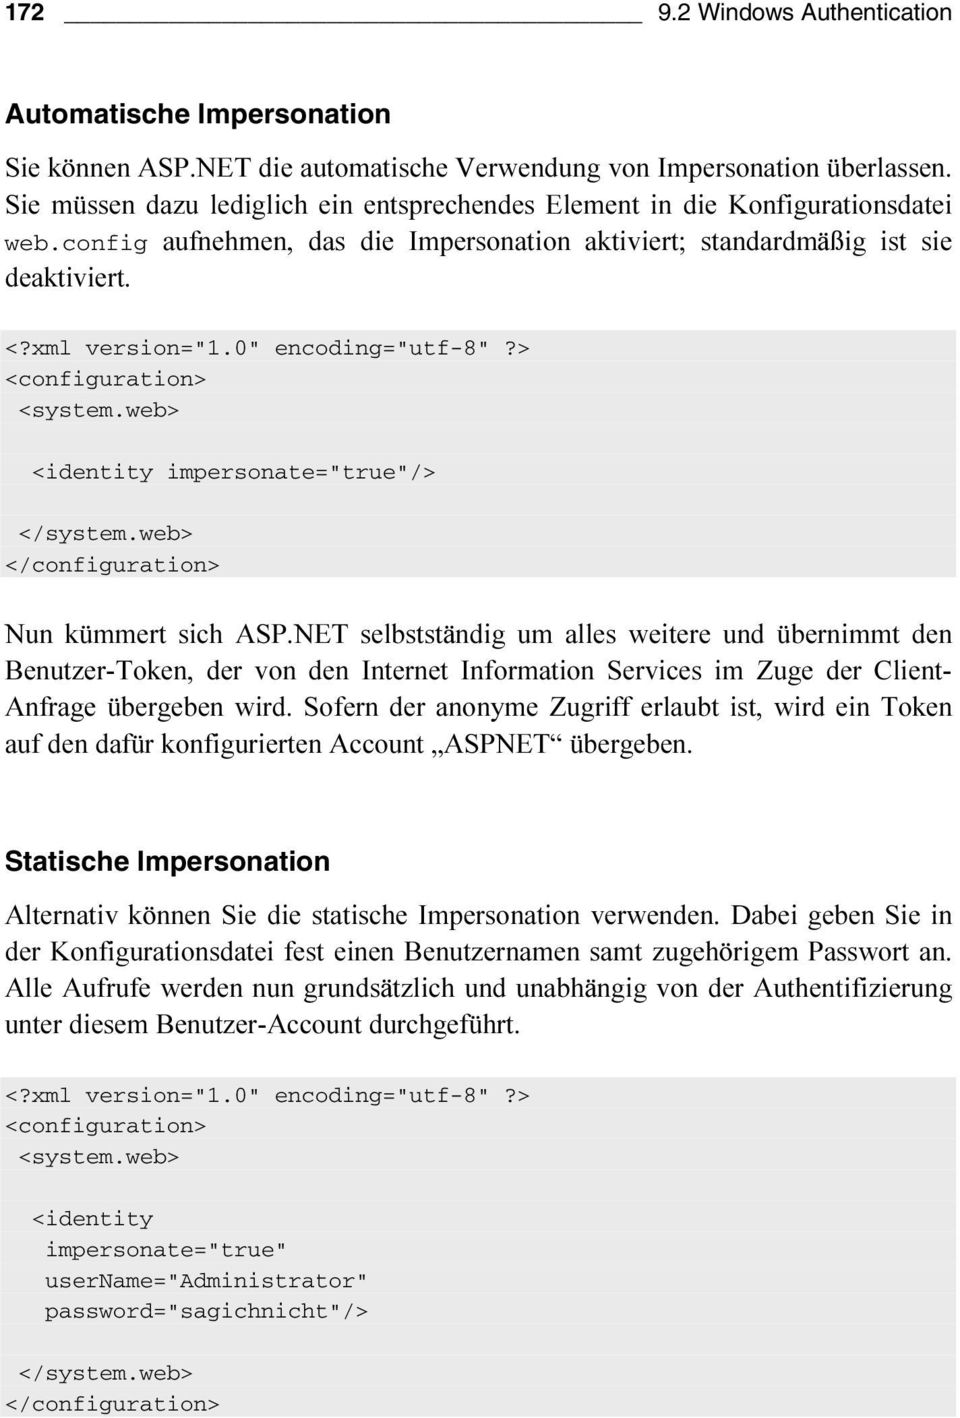 web> </configuration> Statische Impersonation <?xml version="1.0" encoding="utf-8"?